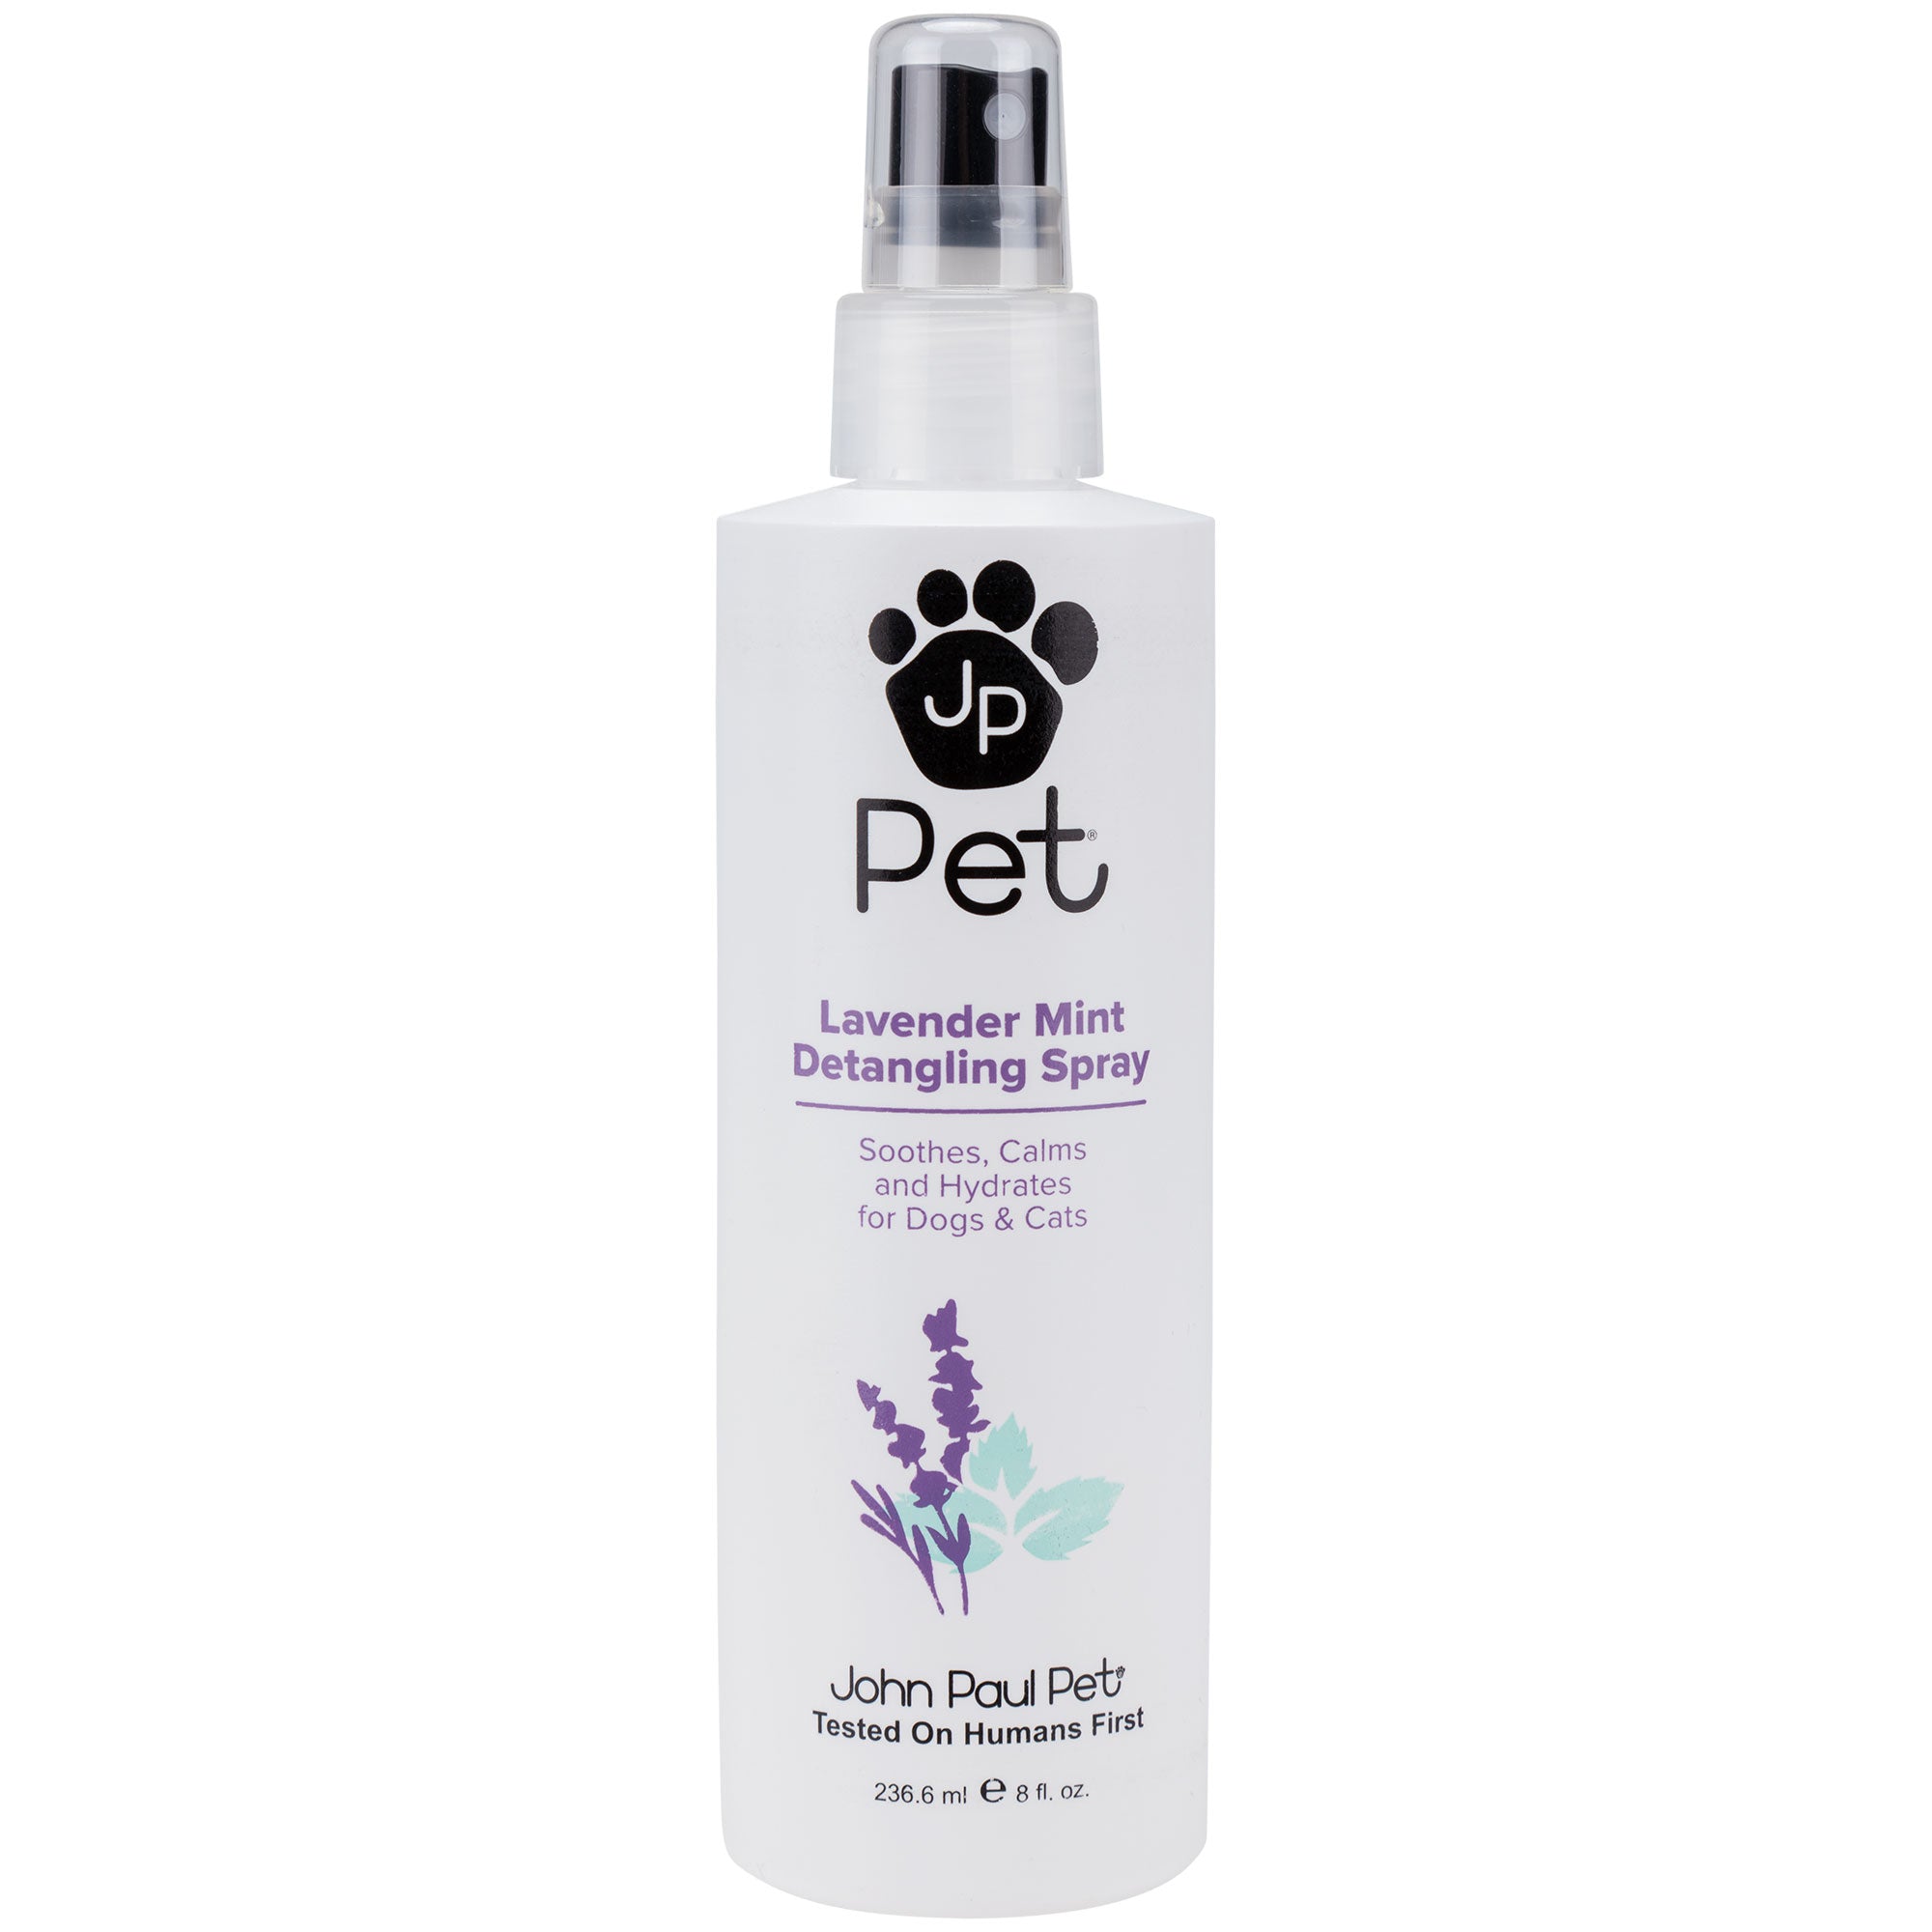 John Paul Pet™ Lavender Grooming Products - Detangling Spray 8 Oz